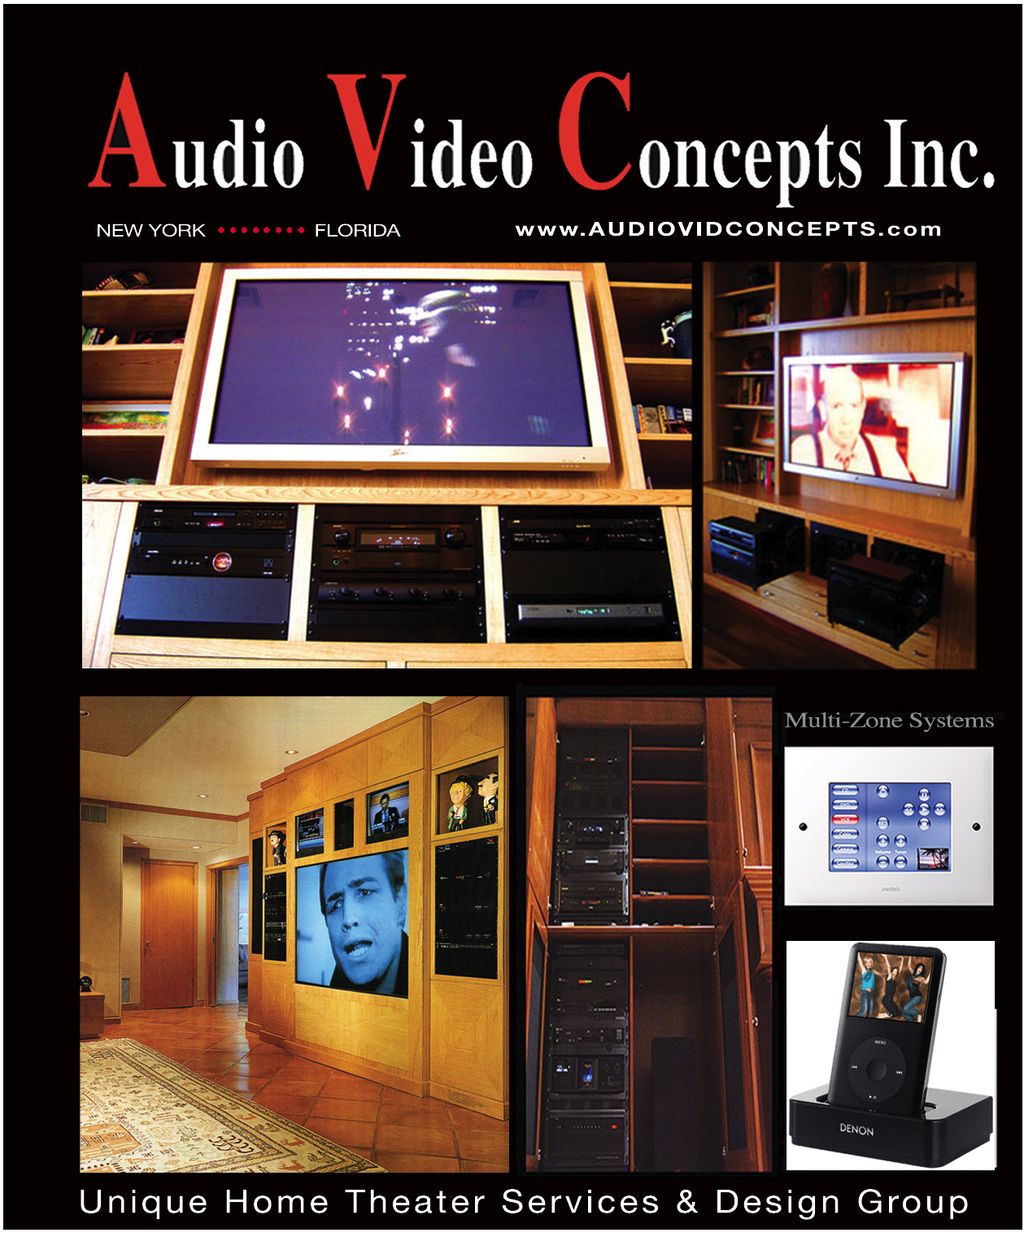 Audio Video Concepts Inc